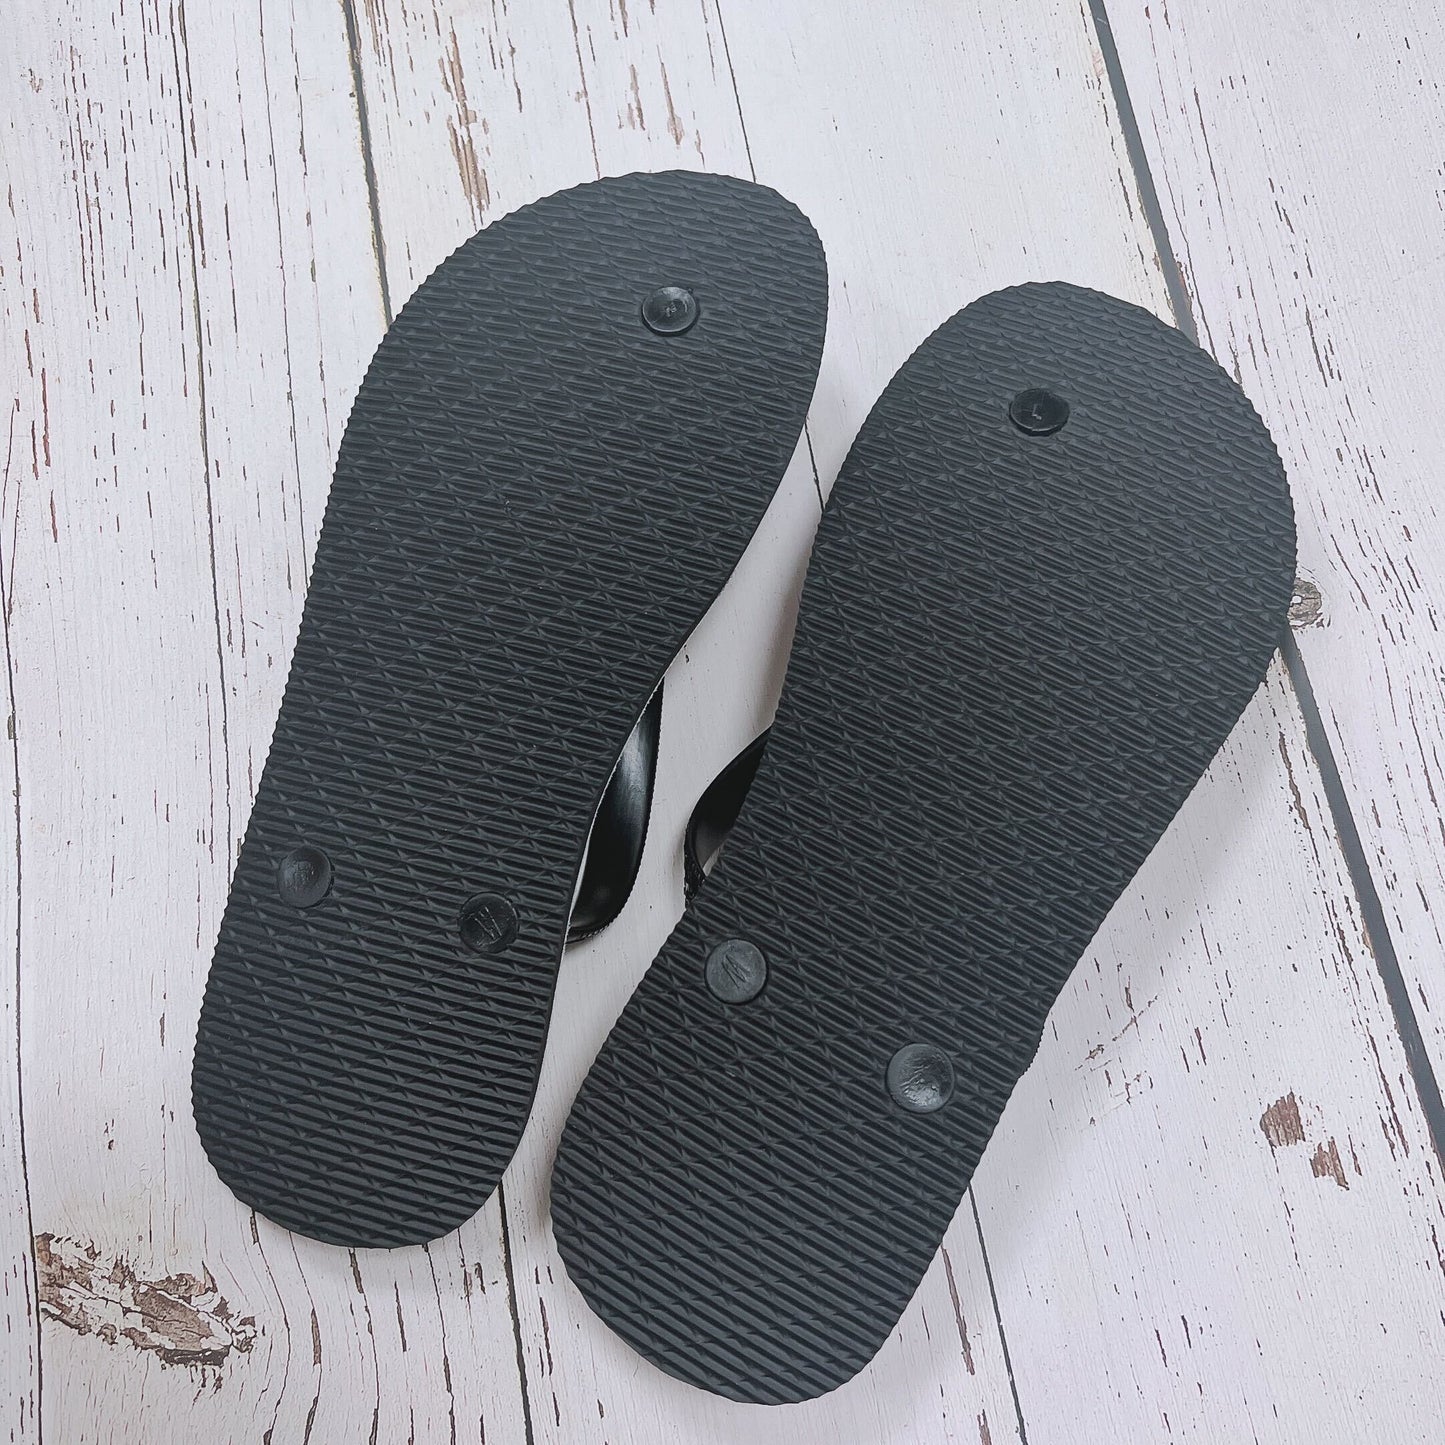 [Asamimi-chan] Sandales de plage (Asamimi BASIC mai) [Expédiées mi-juillet]